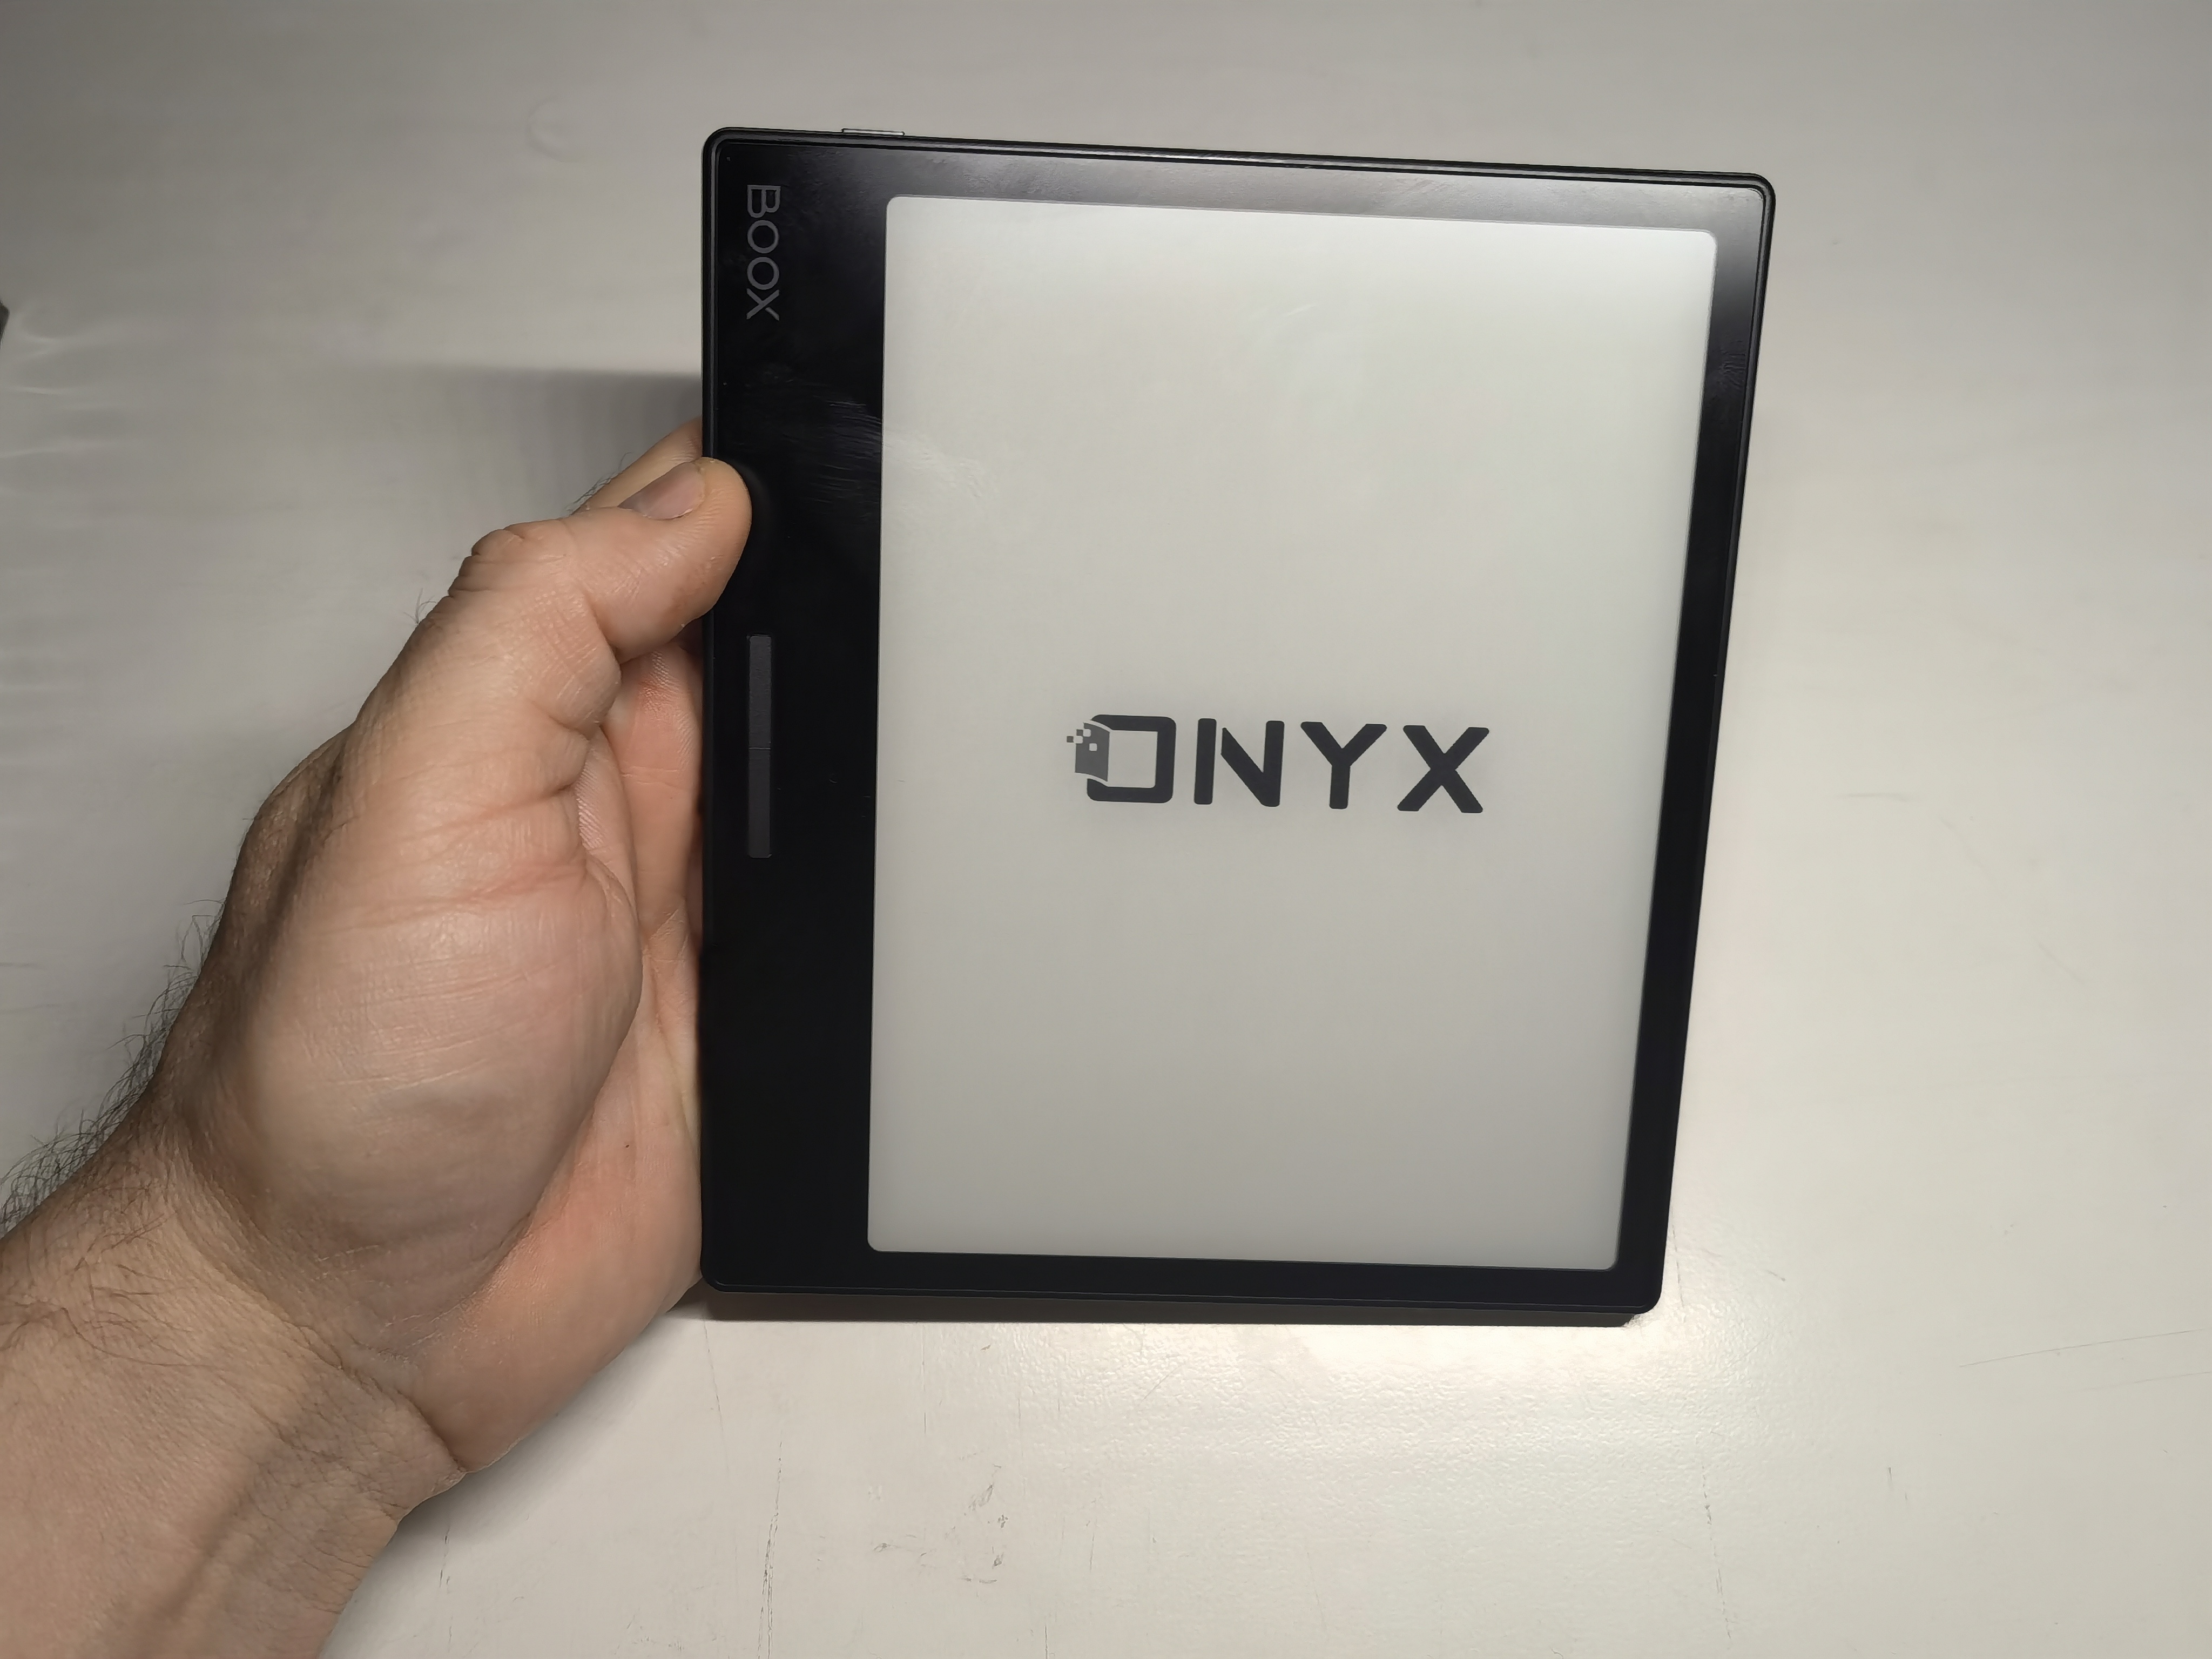 Onyx boox kant 2